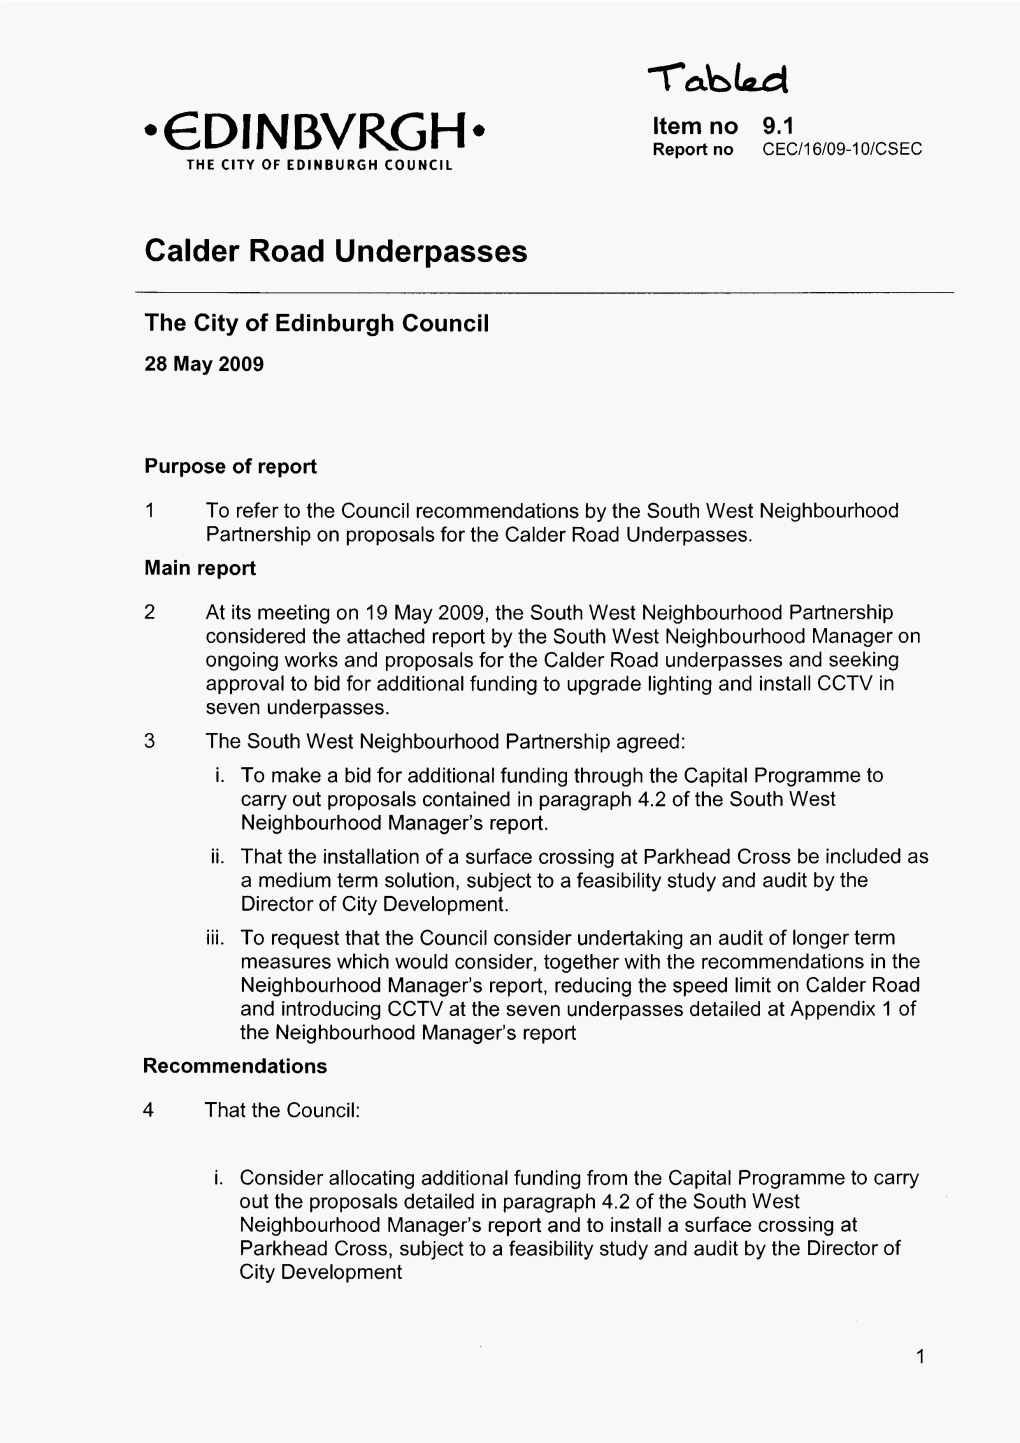 Calder Road Underpasses